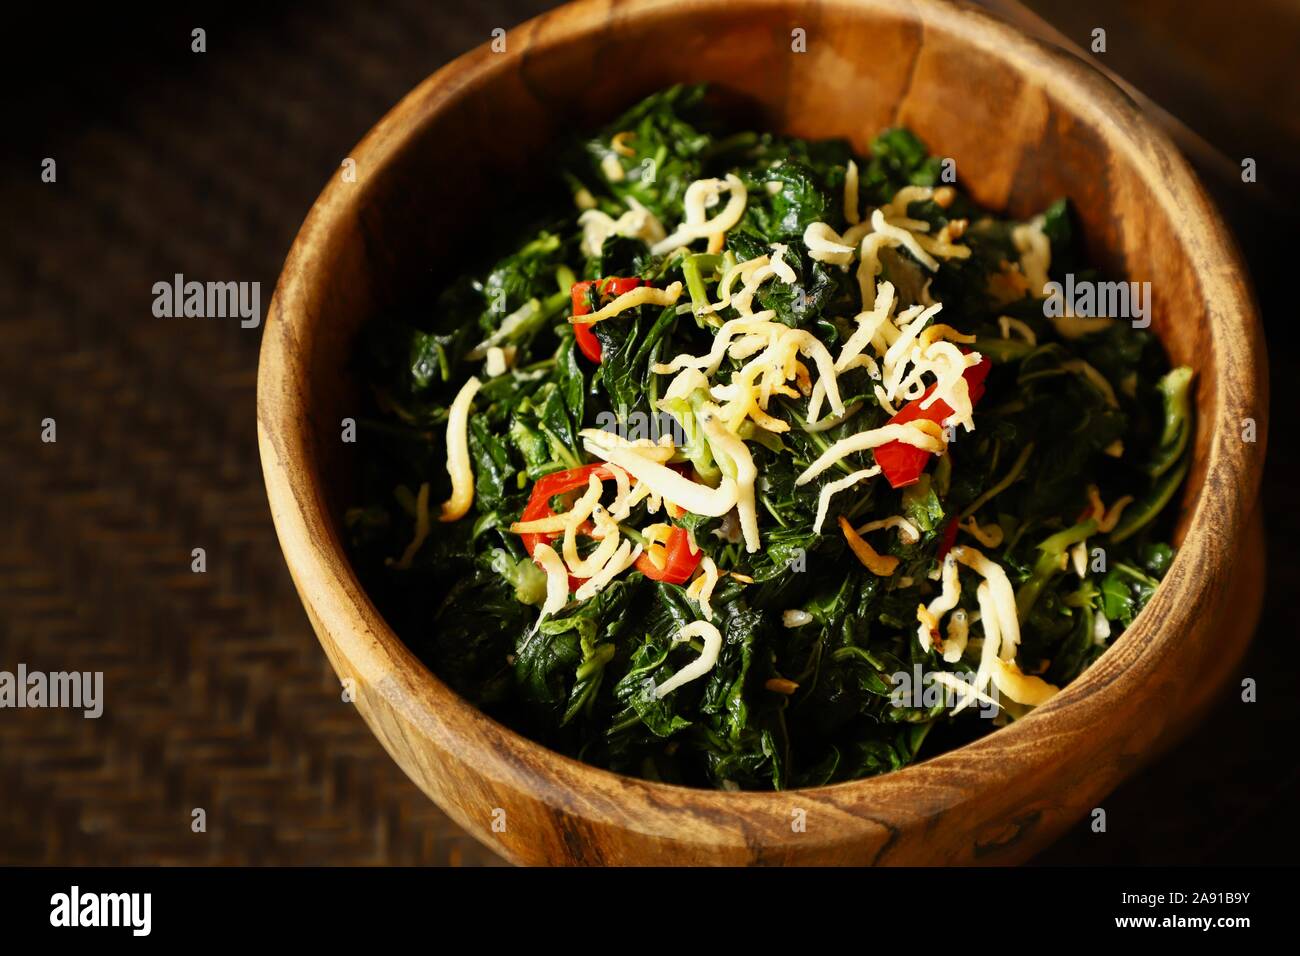 Tumis Daun Singkong. Stir-fried cassava leaf with stinky beans and crispy salte anchovies. Stock Photo